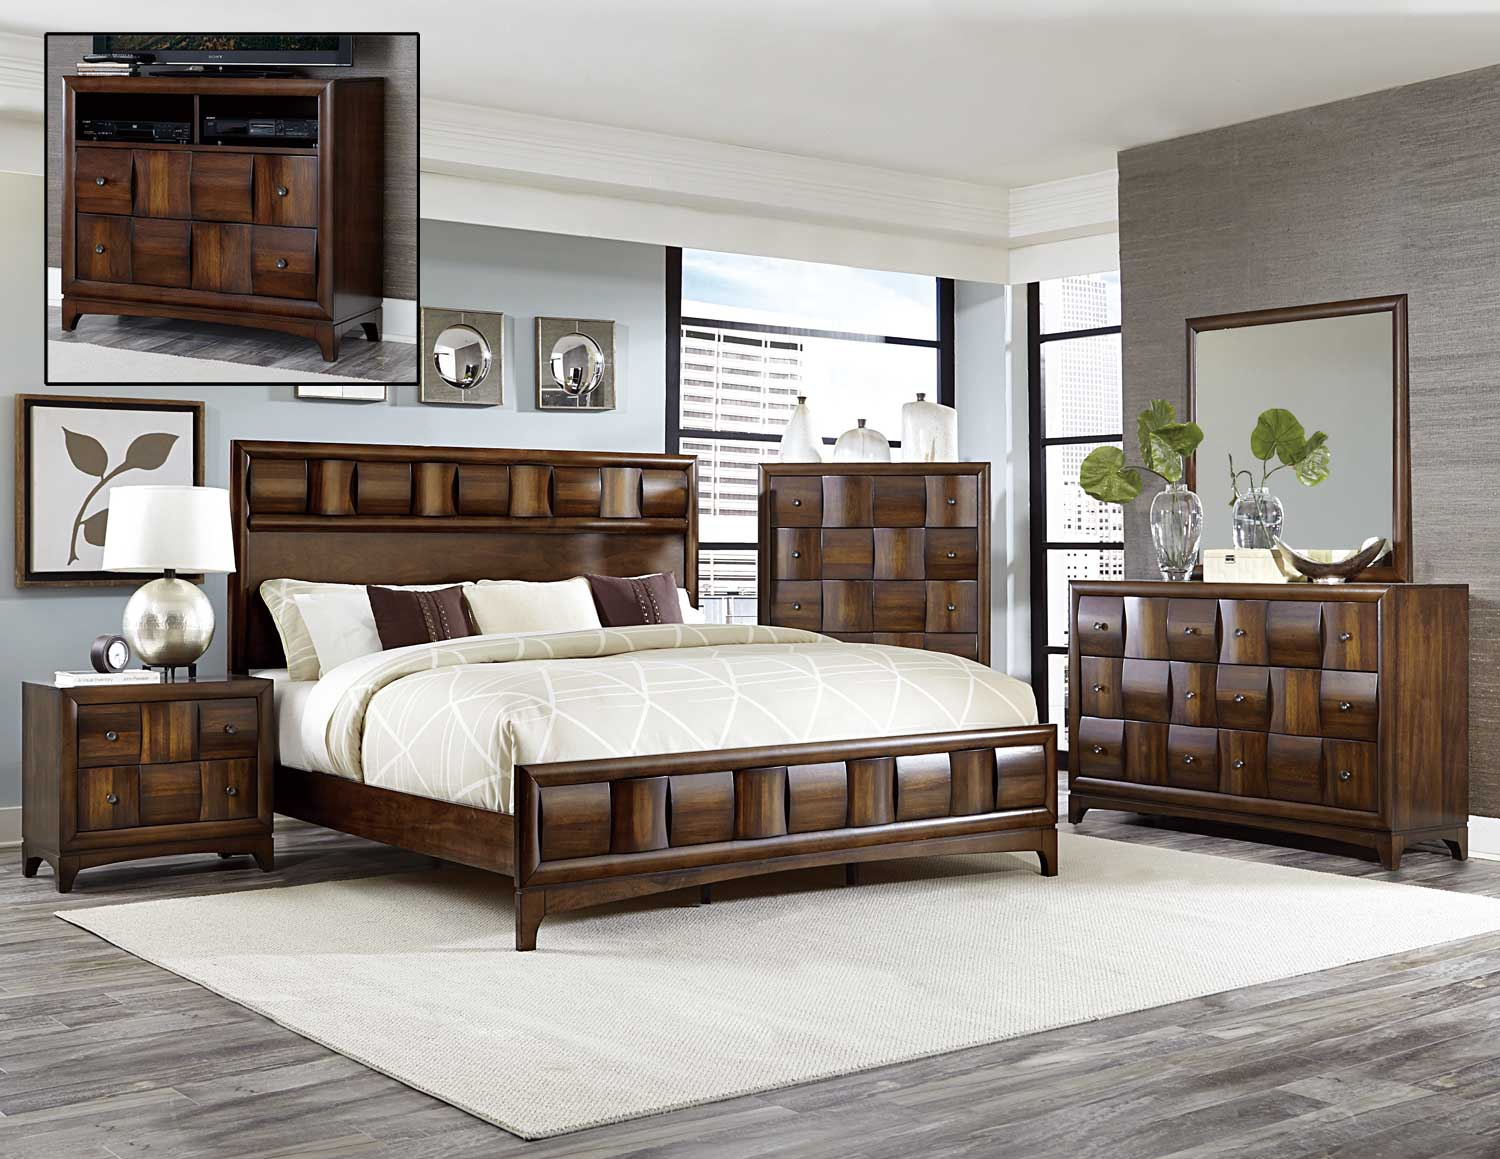 Homelegance Porter Bedroom Set Warm Walnut throughout proportions 1500 X 1159